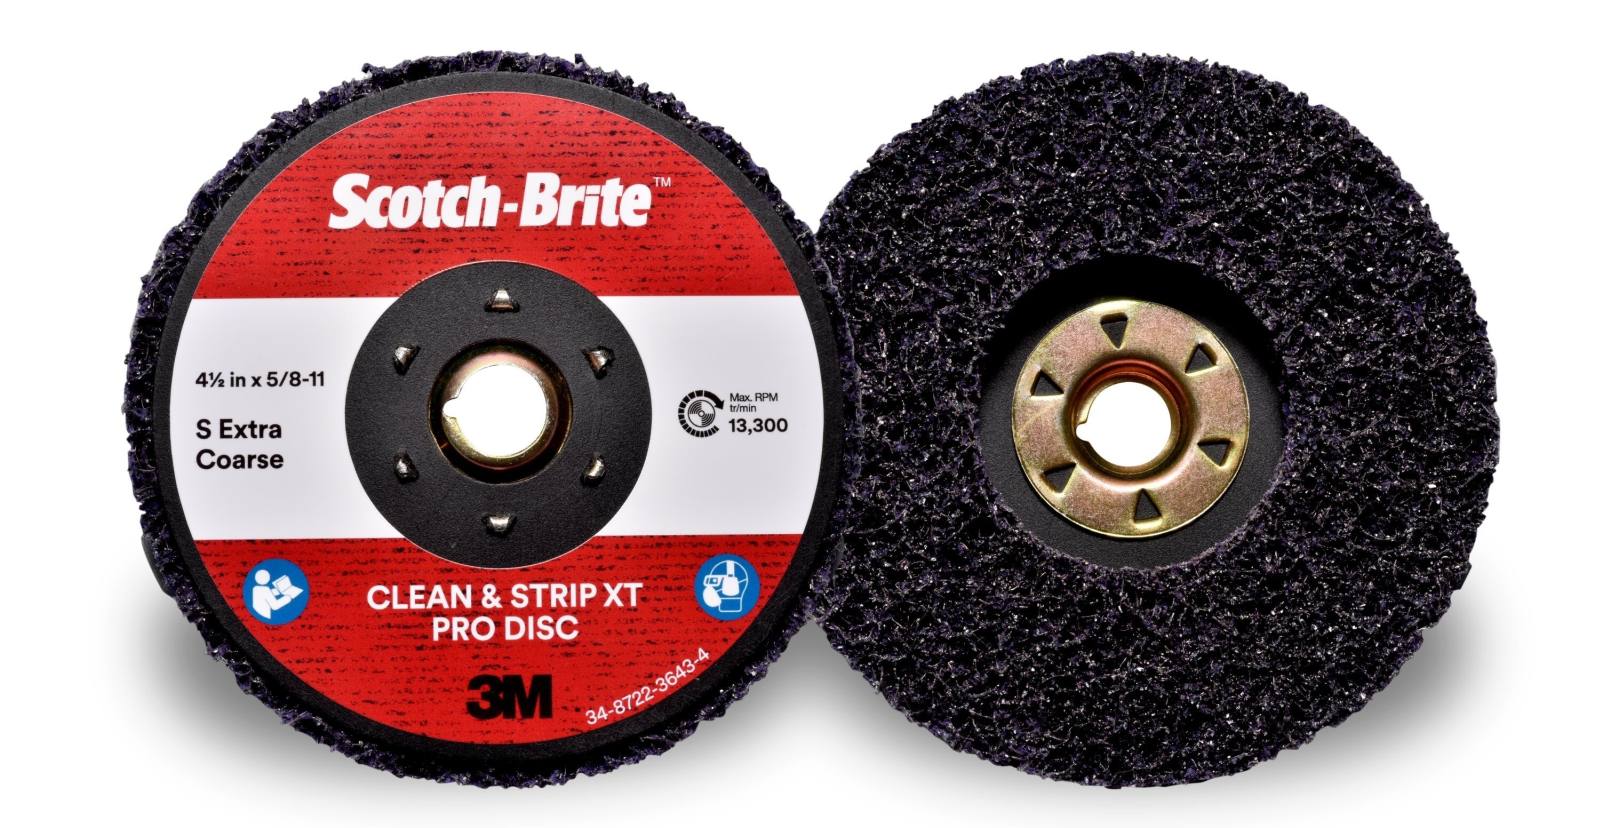 3M Scotch-Brite coarse cleaning disc XT-DB Pro, 115 mm x 22 mm, S, extra coarse